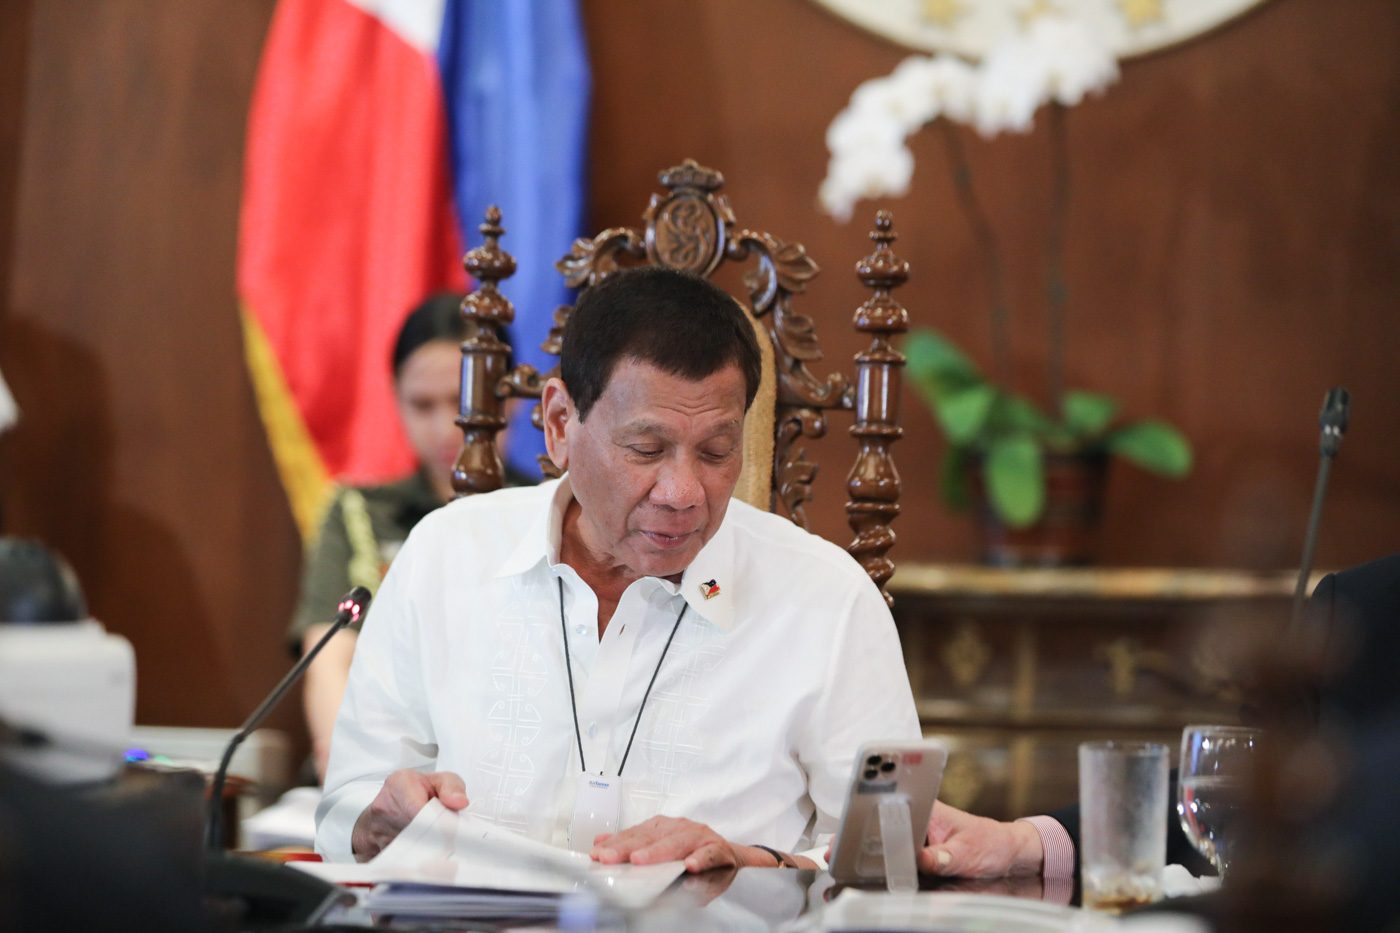 Vaping arrest order is latest legal conundrum in Duterte admin